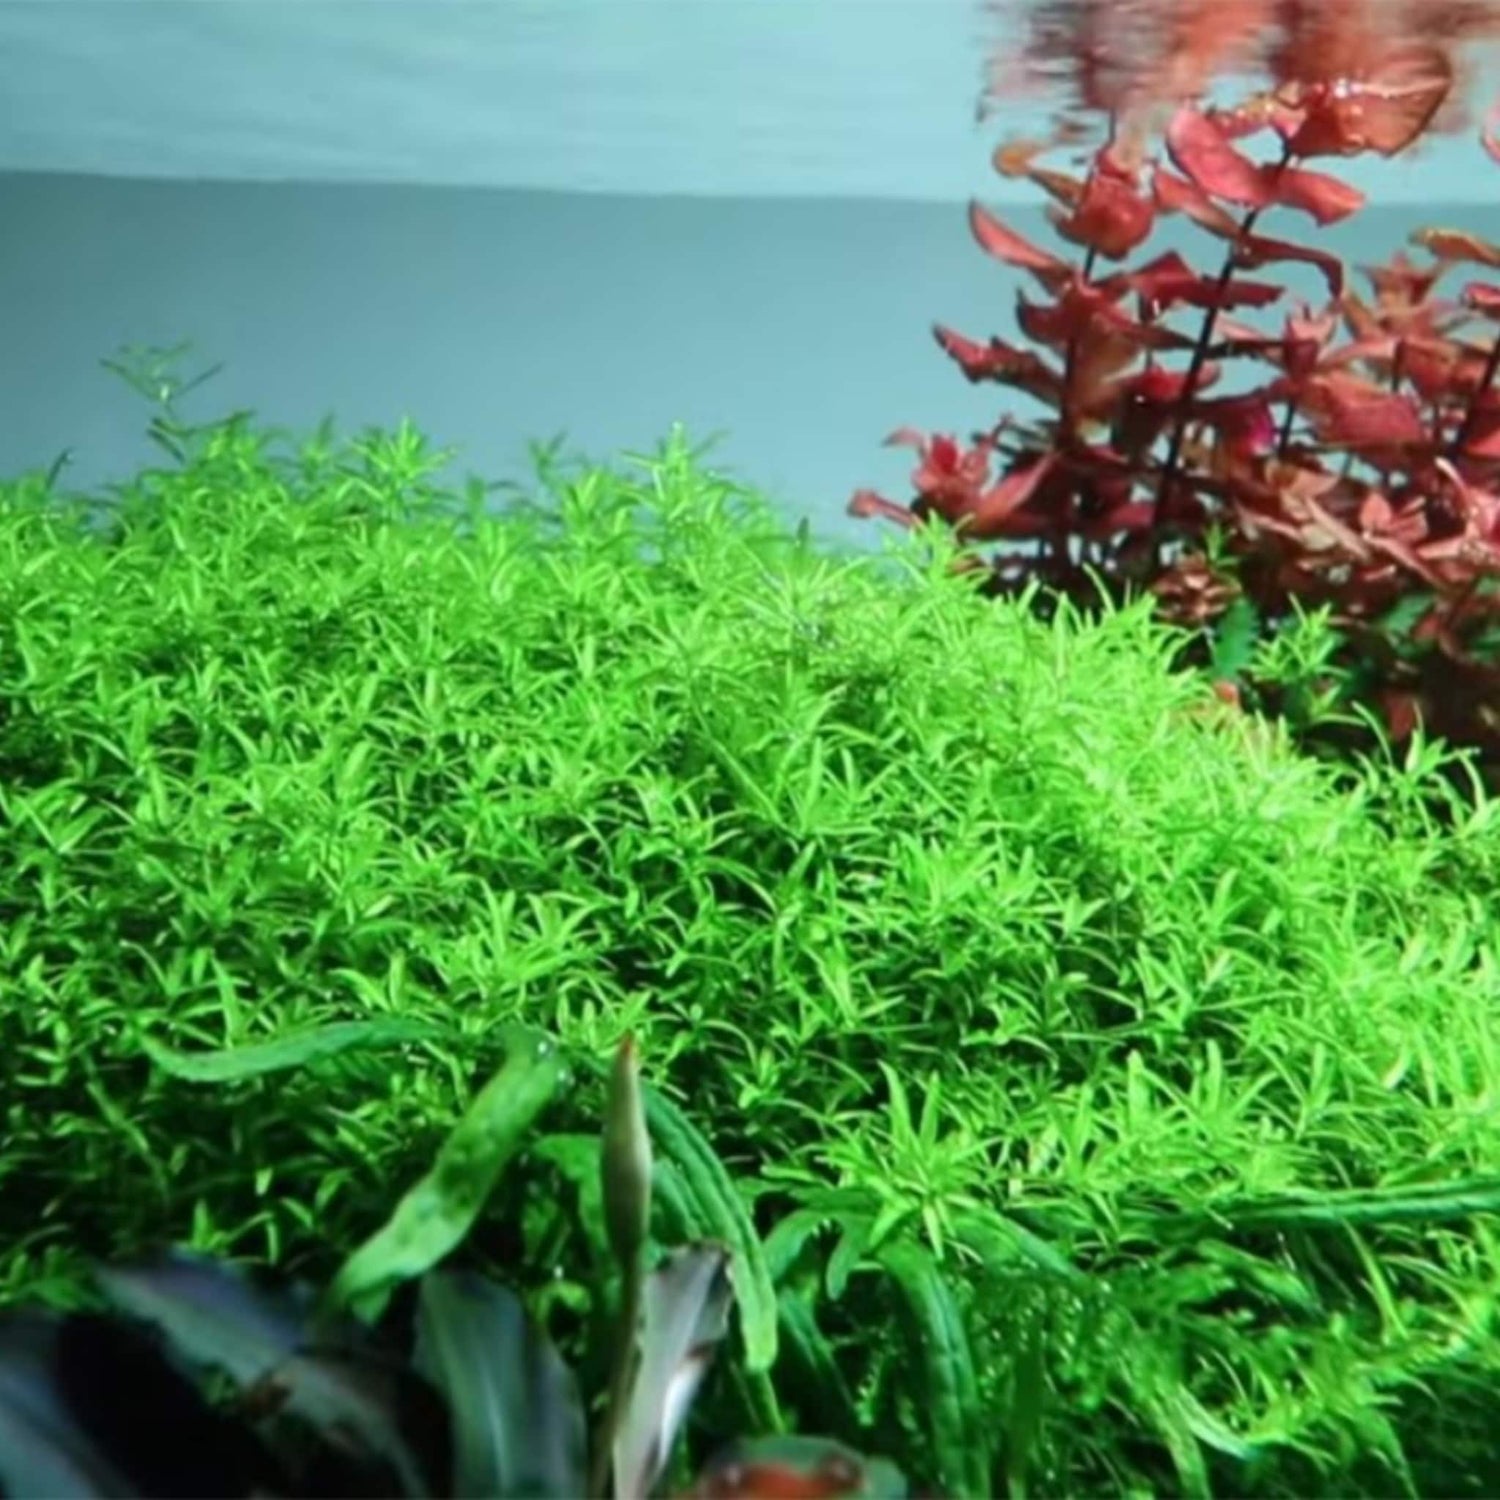 Are planted aquarius hard to maintain?